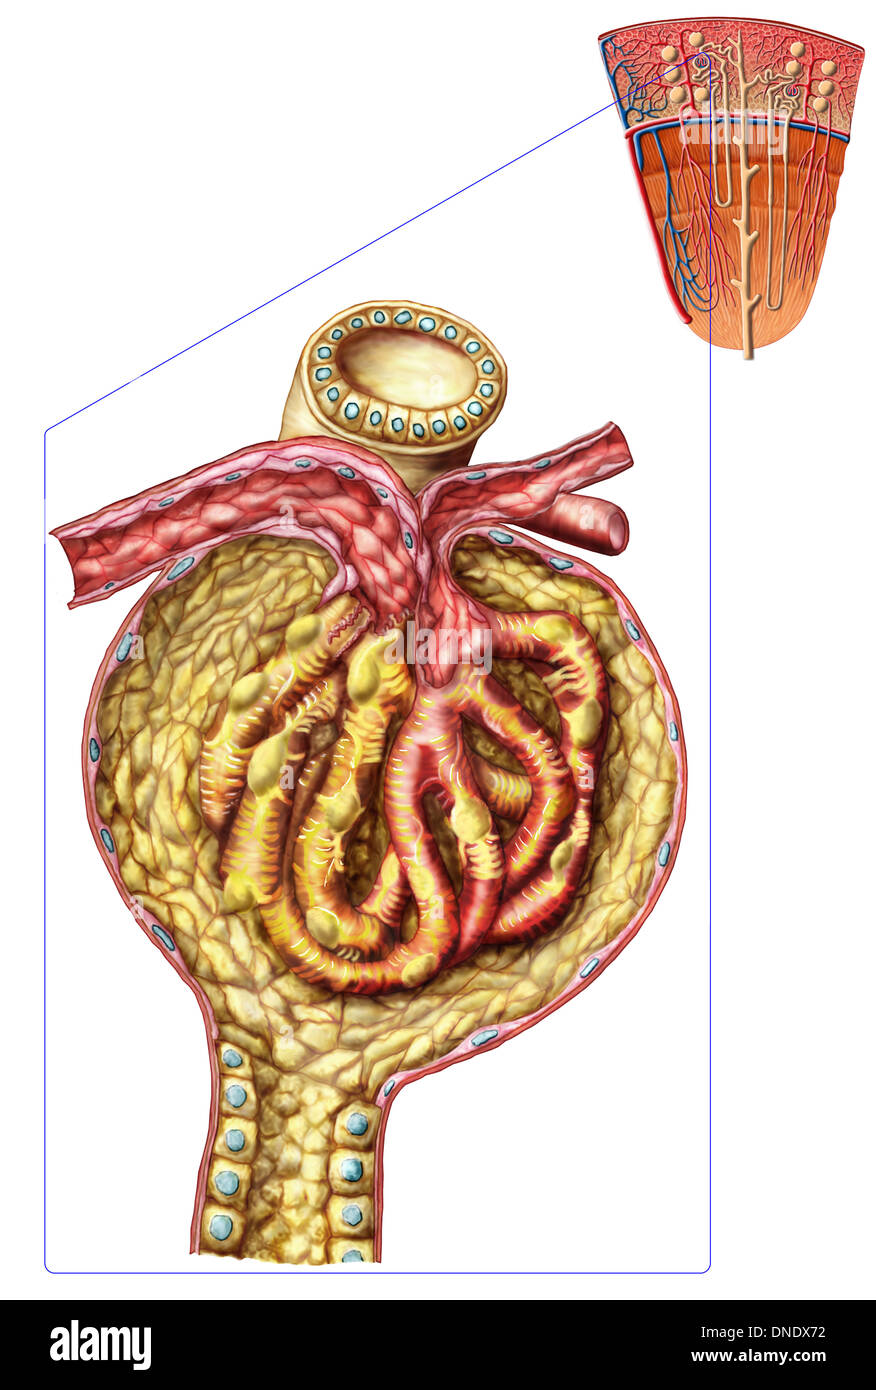 Anatomy of bowman's glomerular capsule. Stock Photo